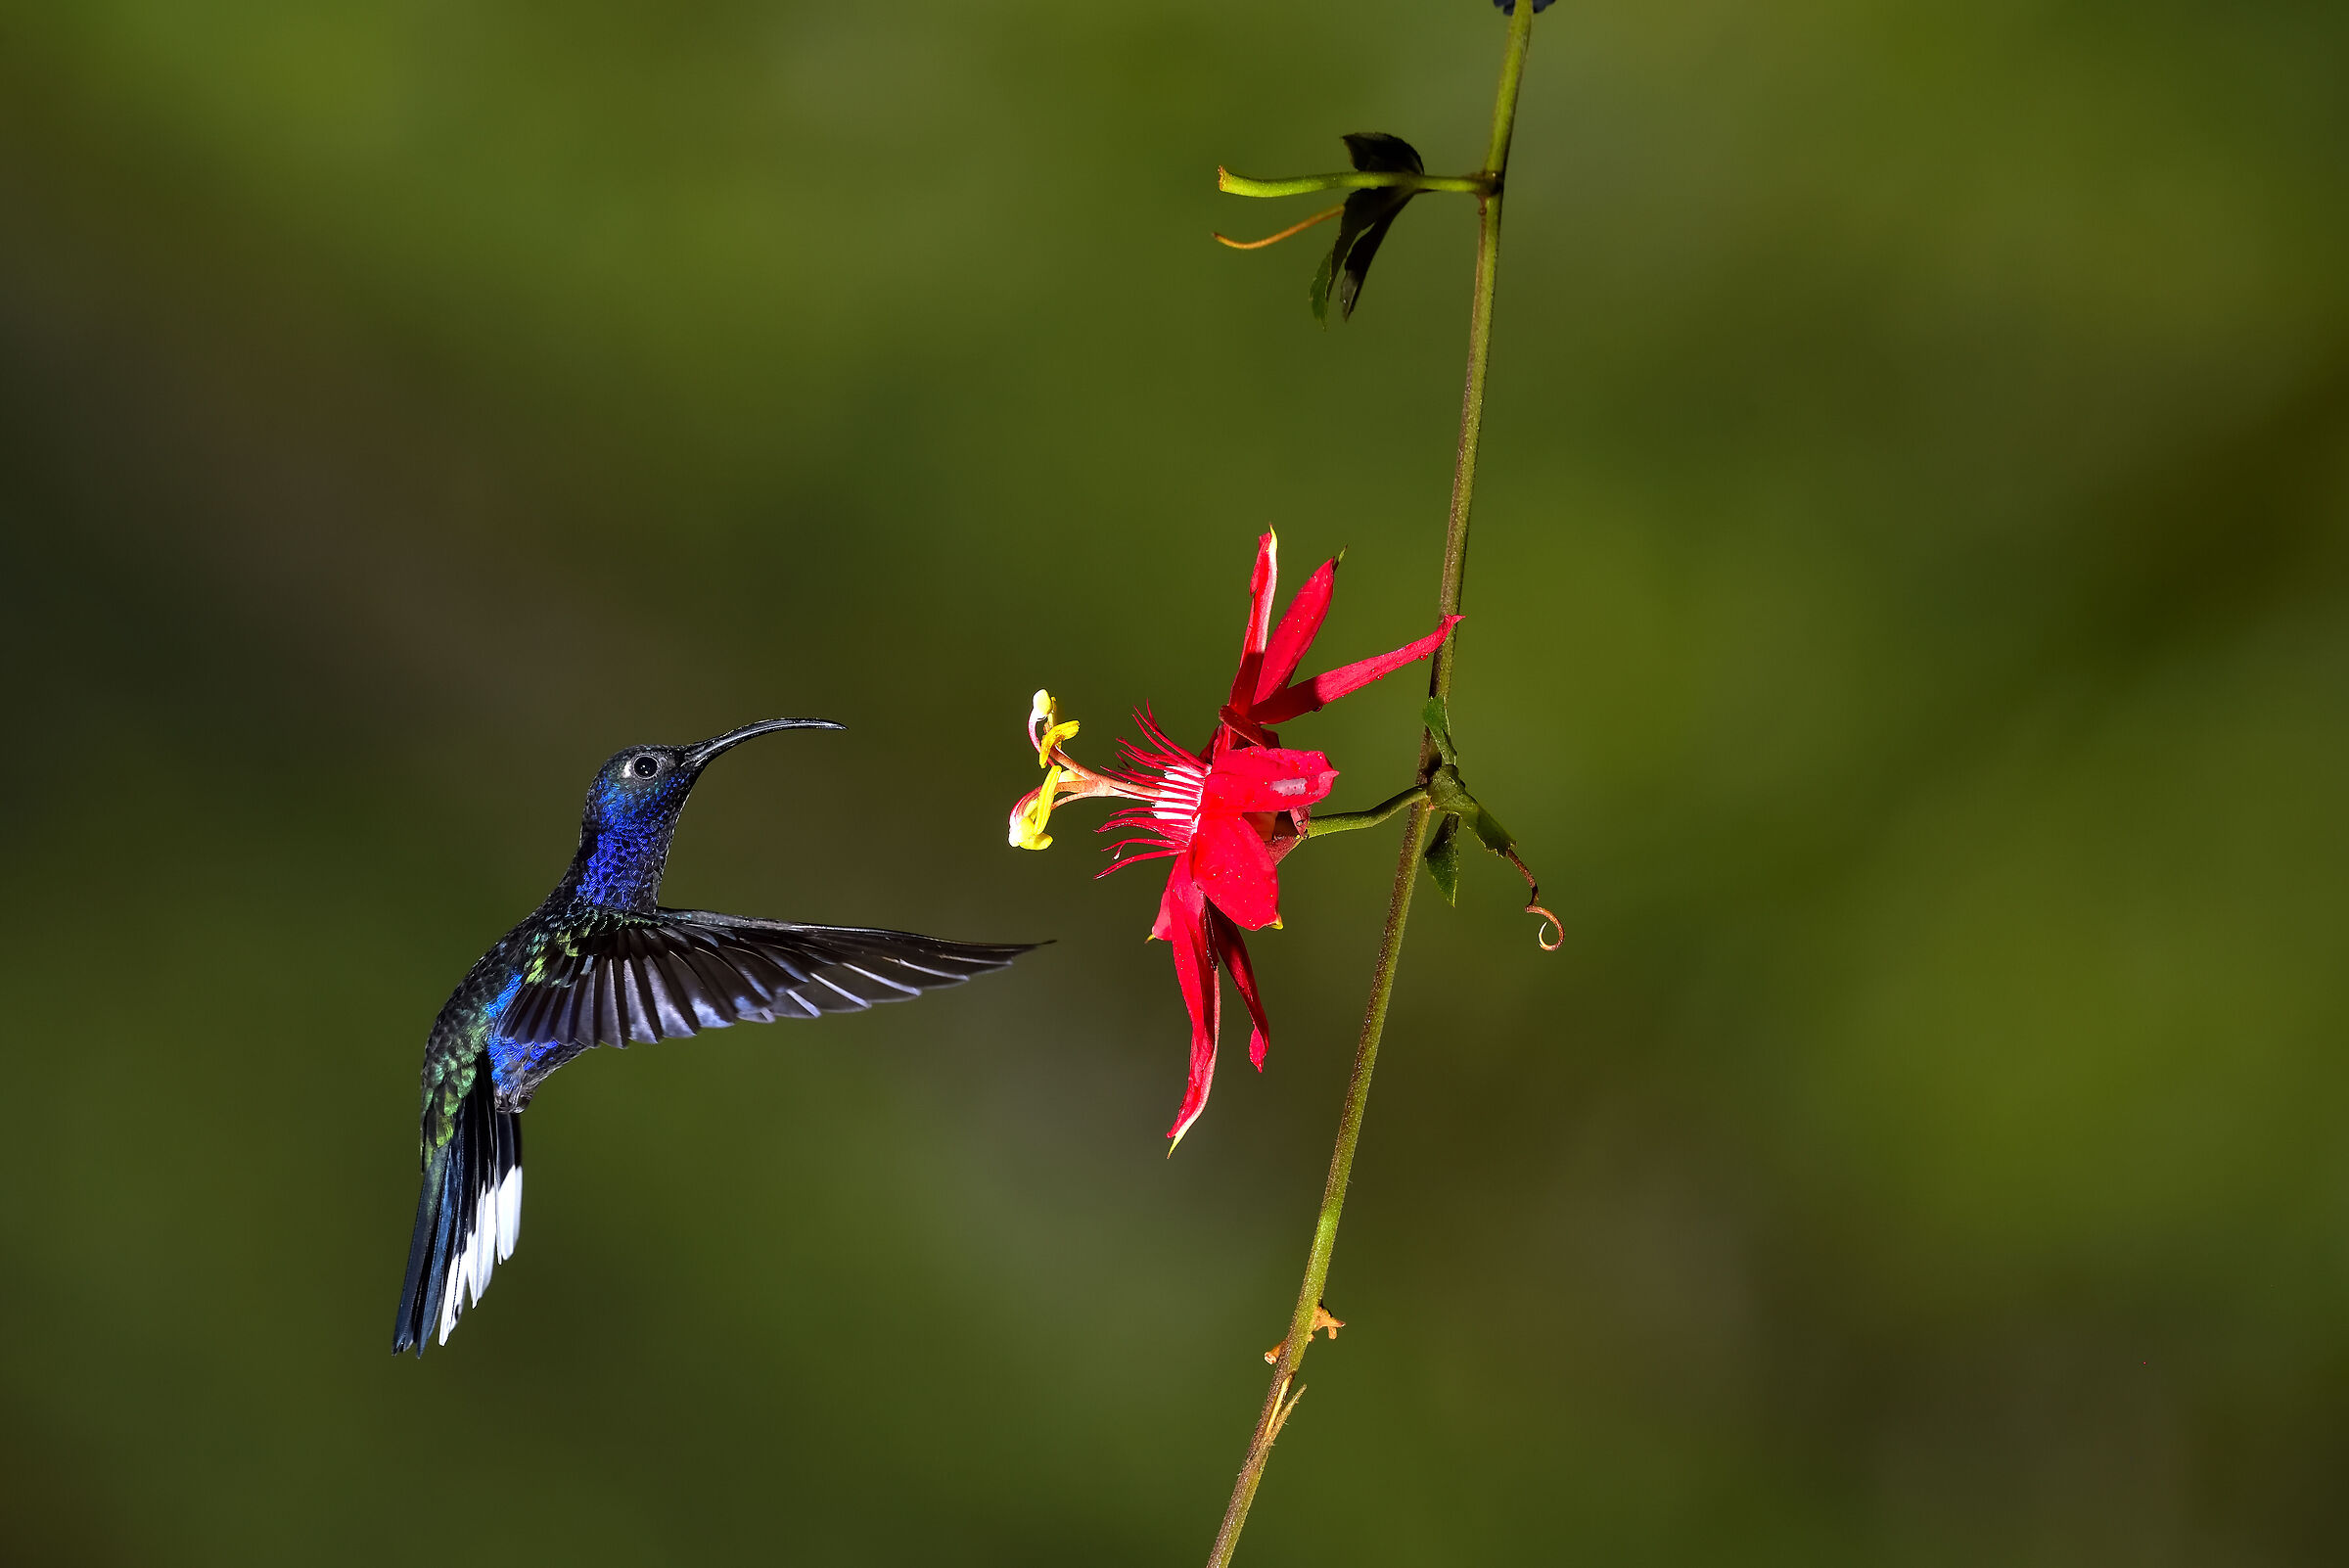 The beauty of the Hummingbird...